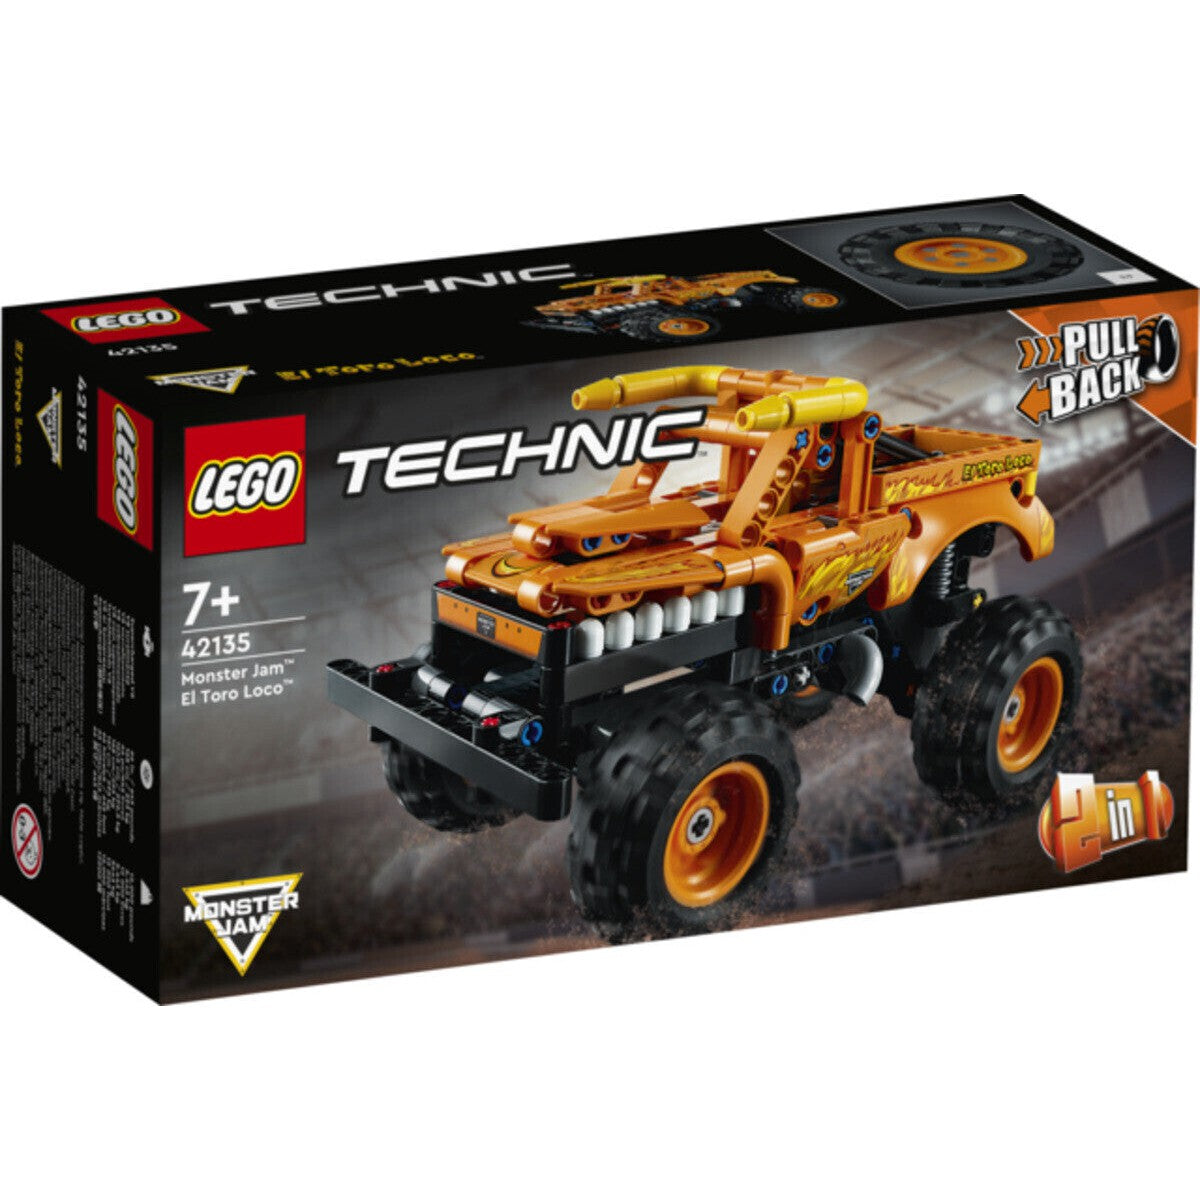 LEGO 42135 Technic 2in1 Monster Jam El Toro Loco